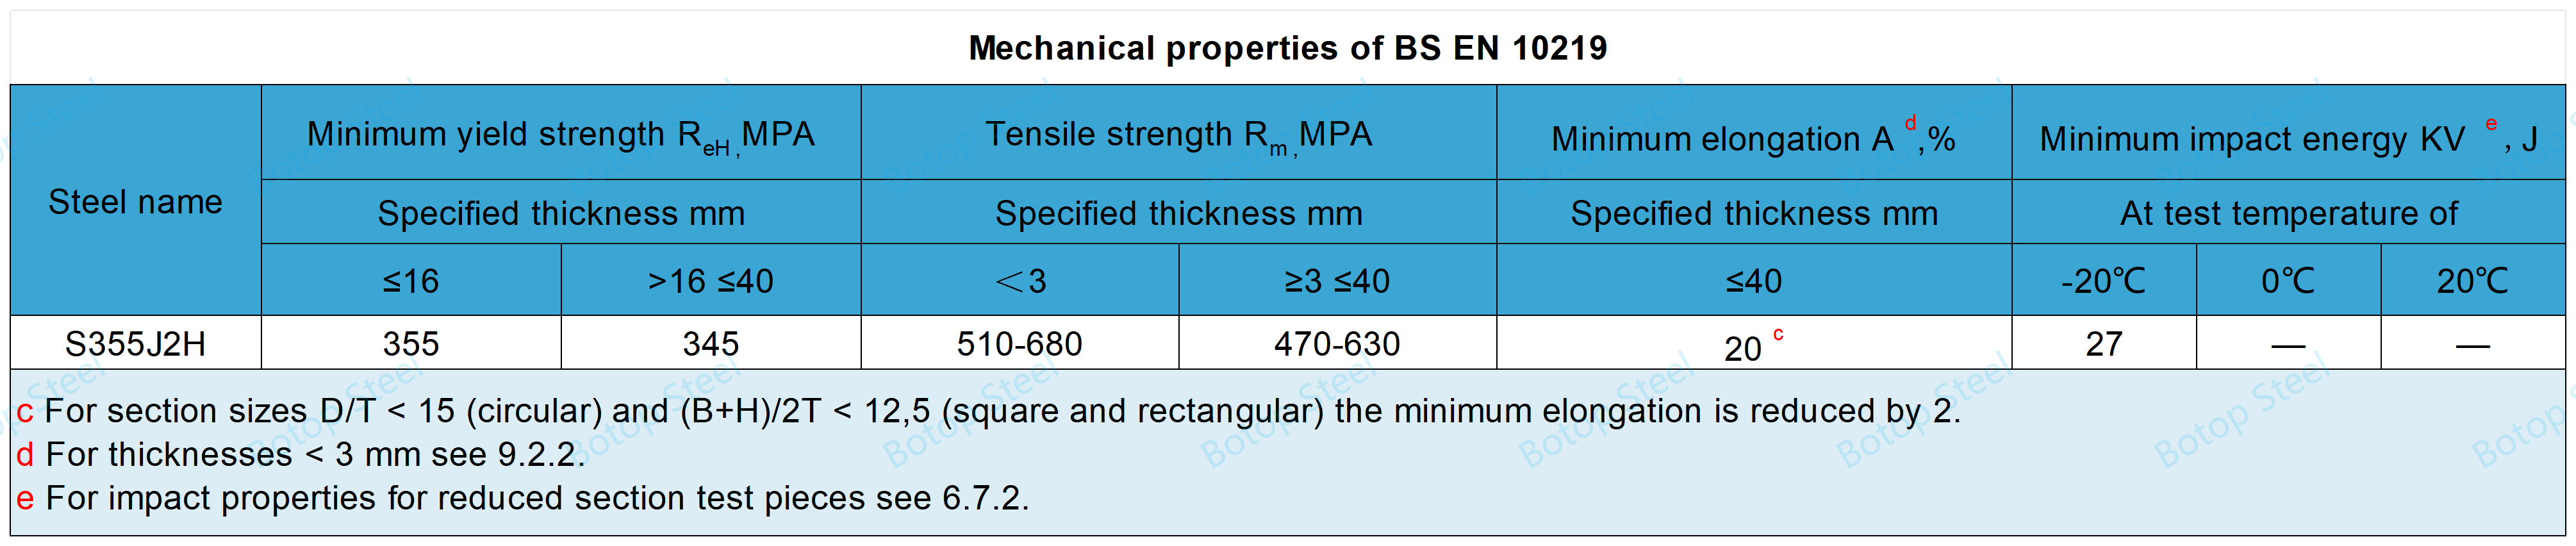 Mechanical properties of BS EN 10219-S355J2H